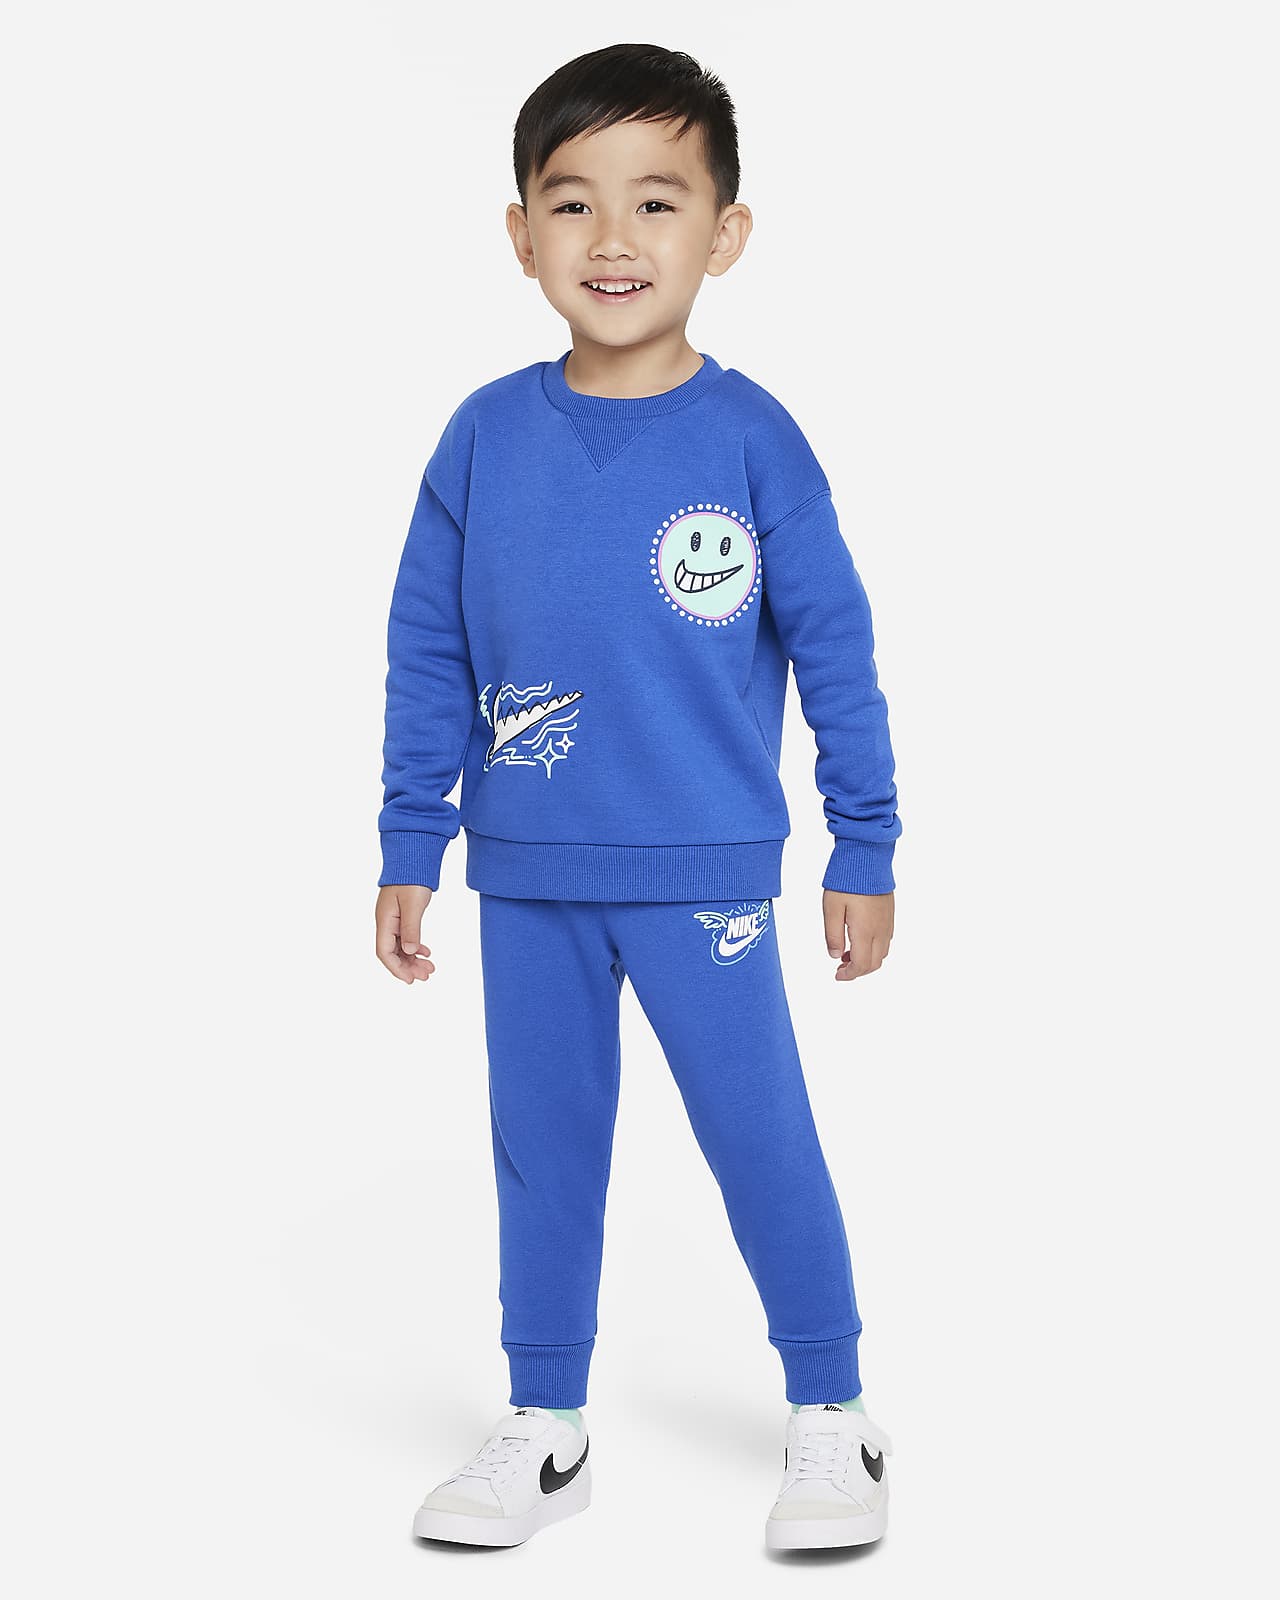 Nike Sportswear "Art of Play" Fleece Crew Set Toddler 2-Piece Set